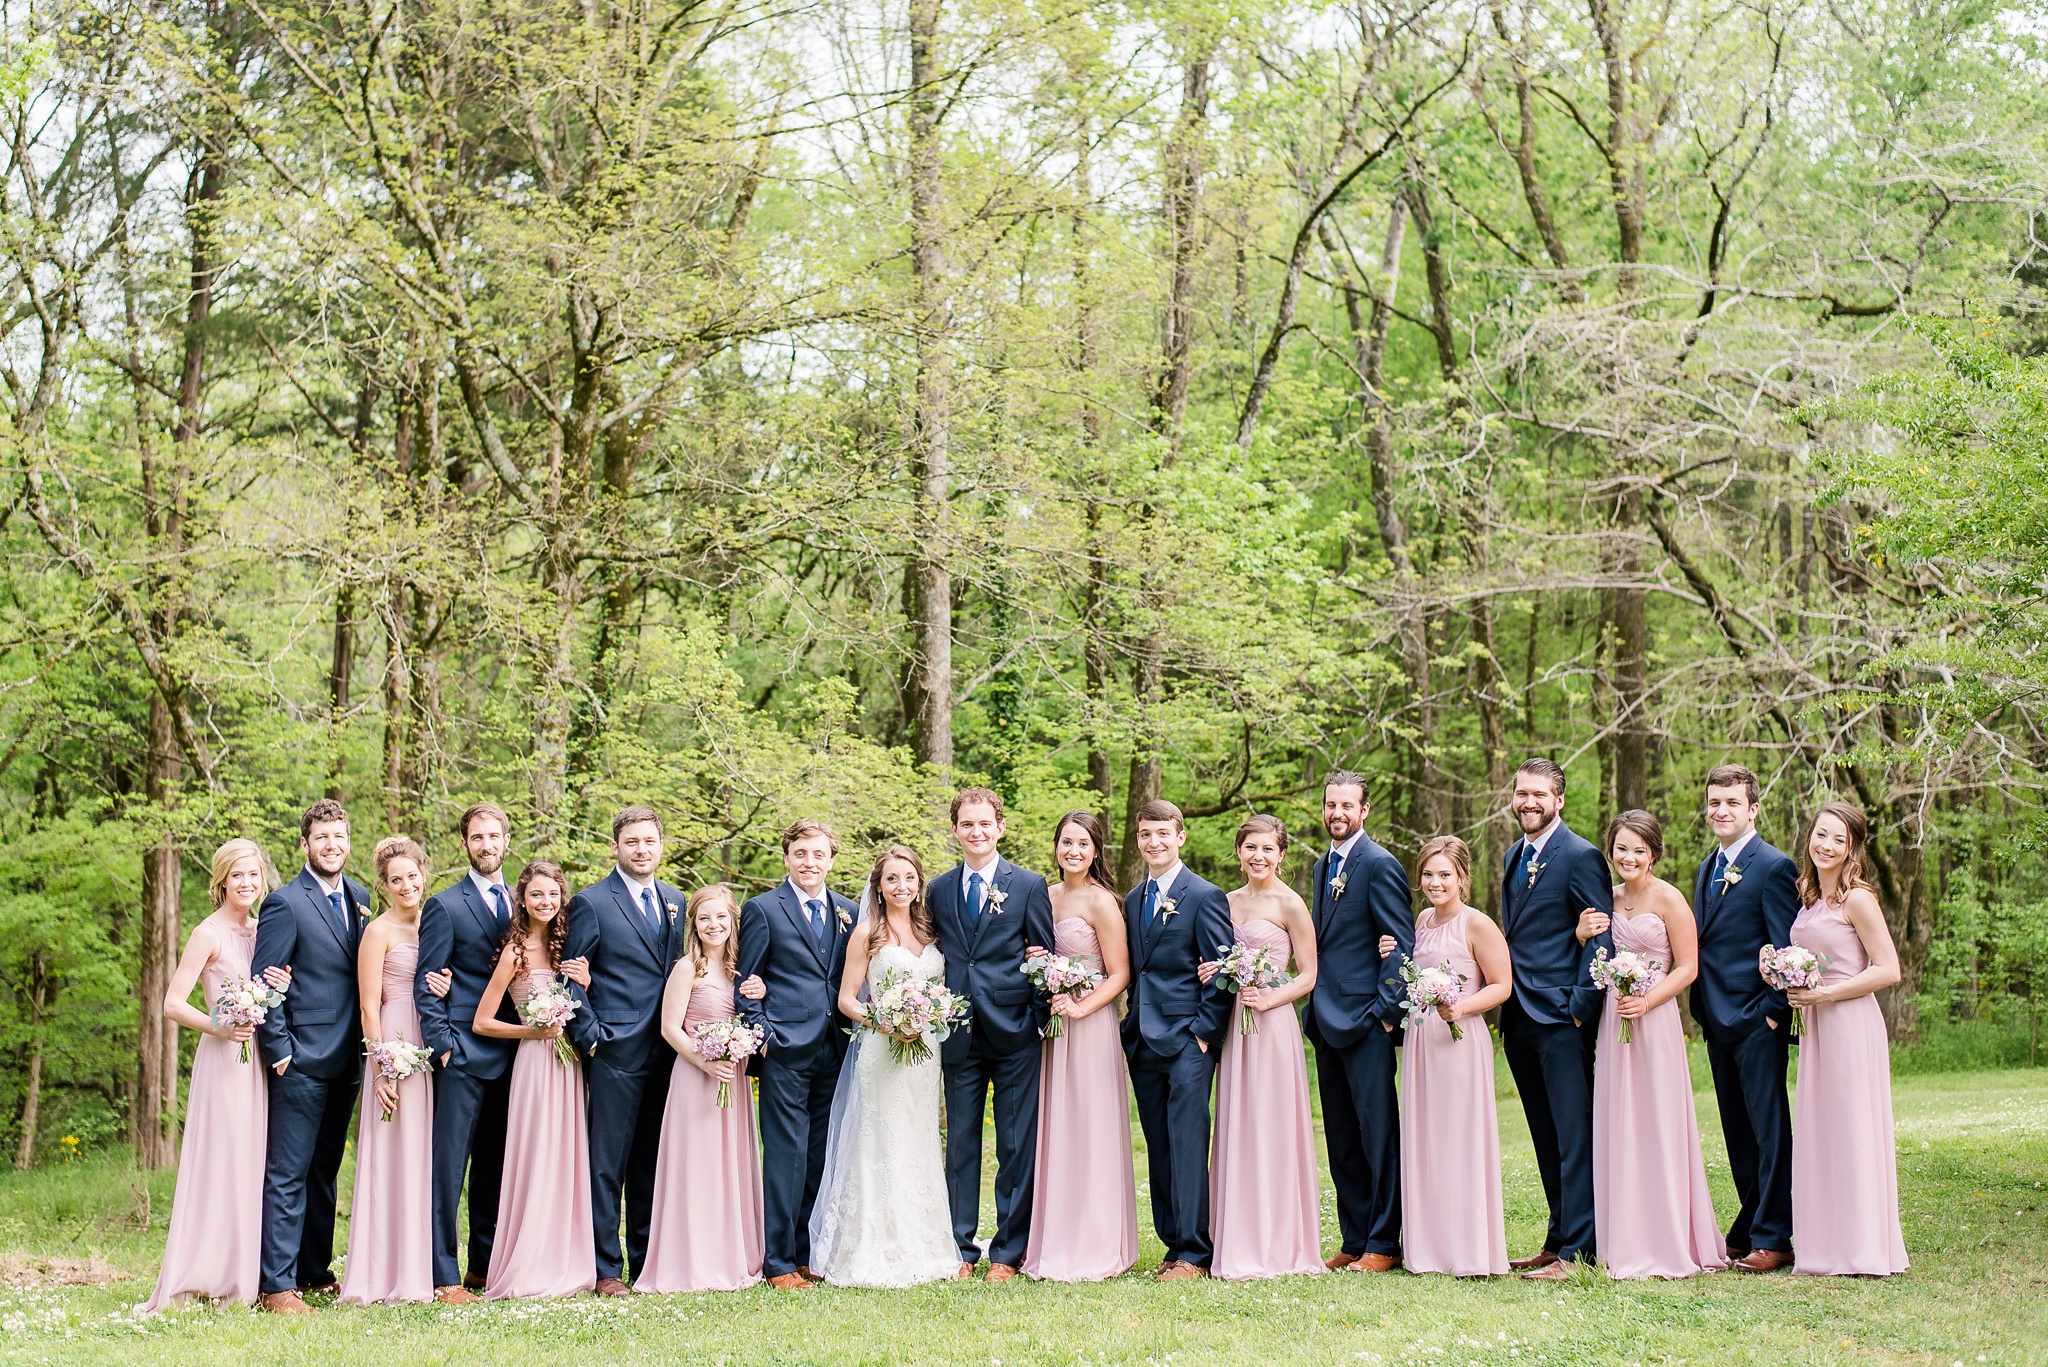 Sonnet House Blush and Gold Spring Wedding | Birmingham Alabama Wedding Photographers_0049.jpg